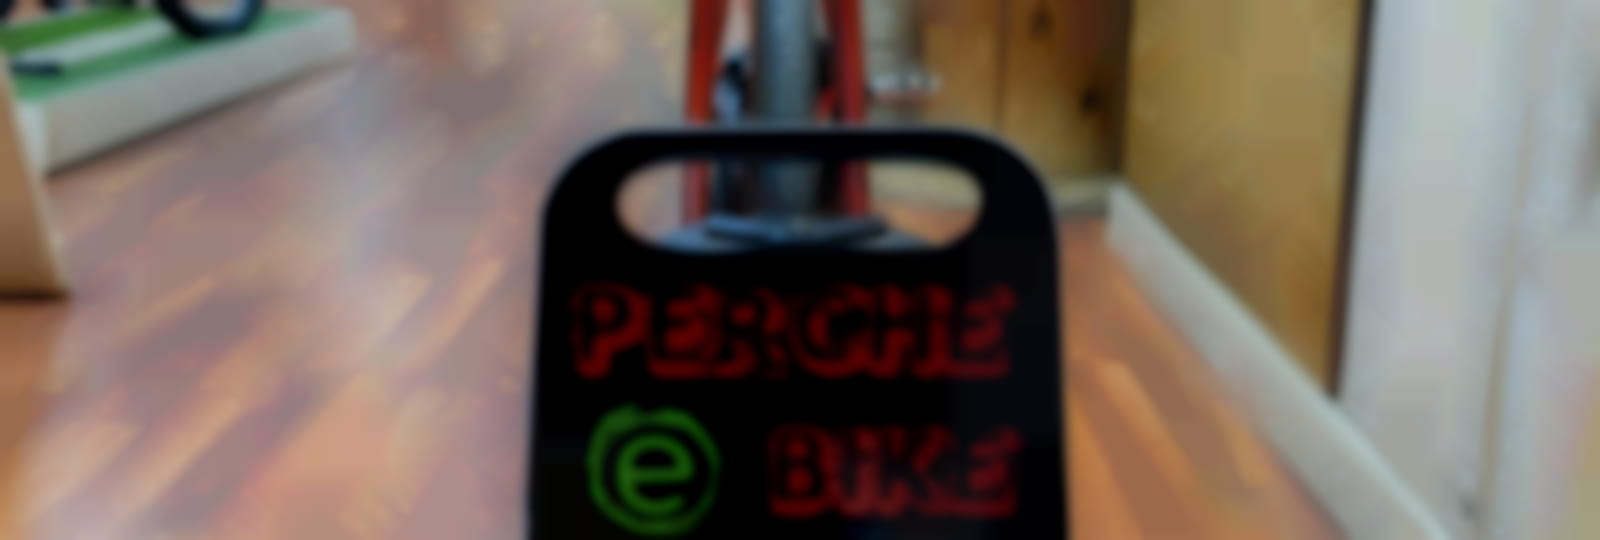 Perche Bike1